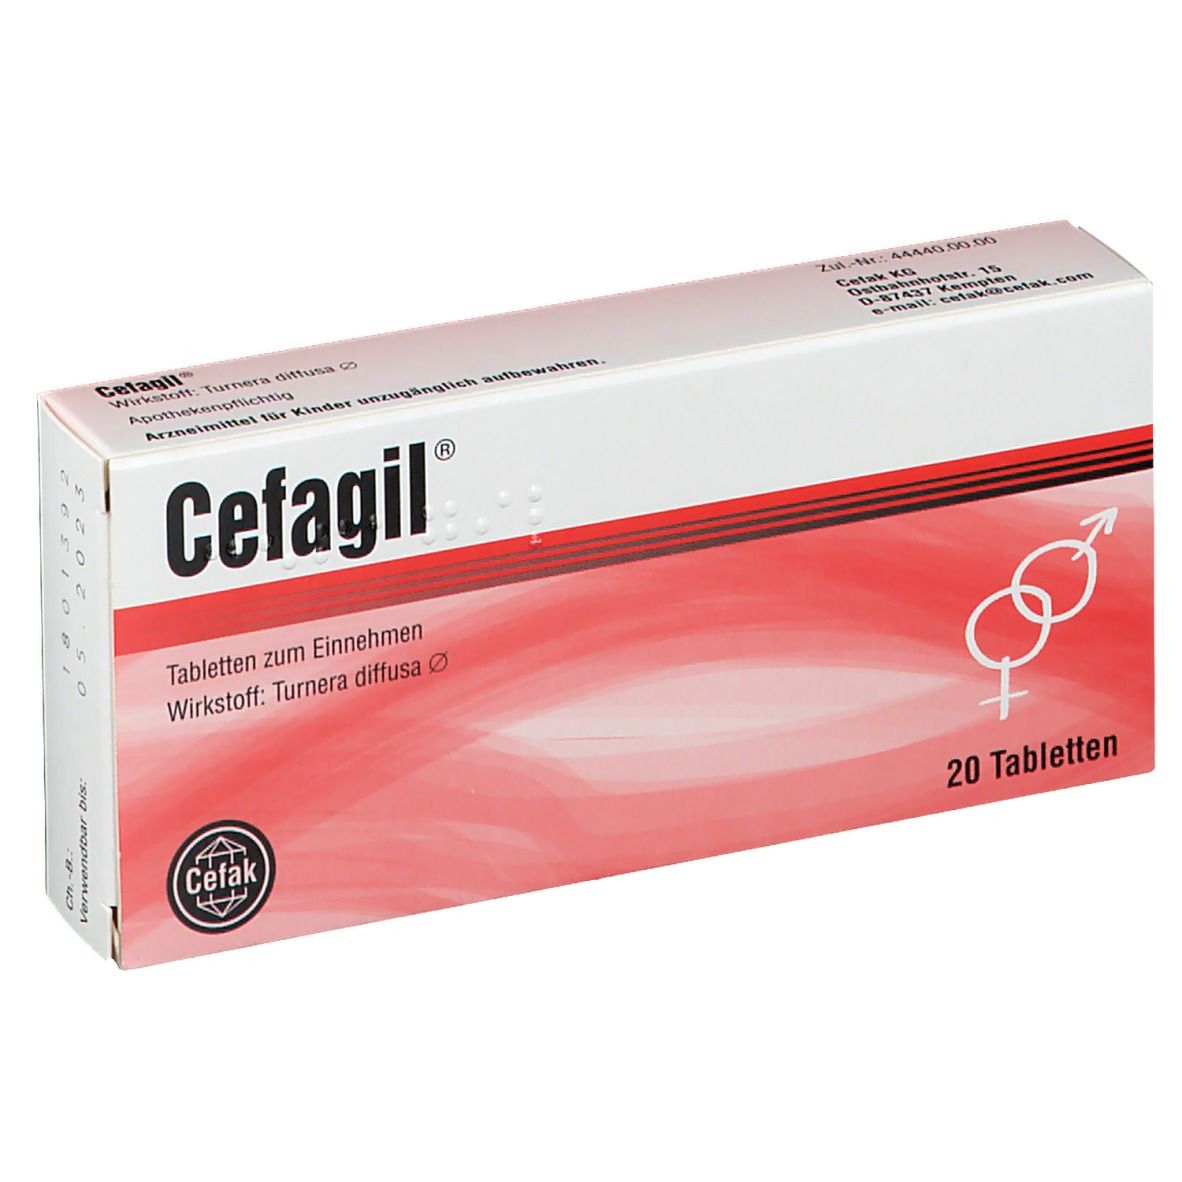 Cefagil® Tabletten